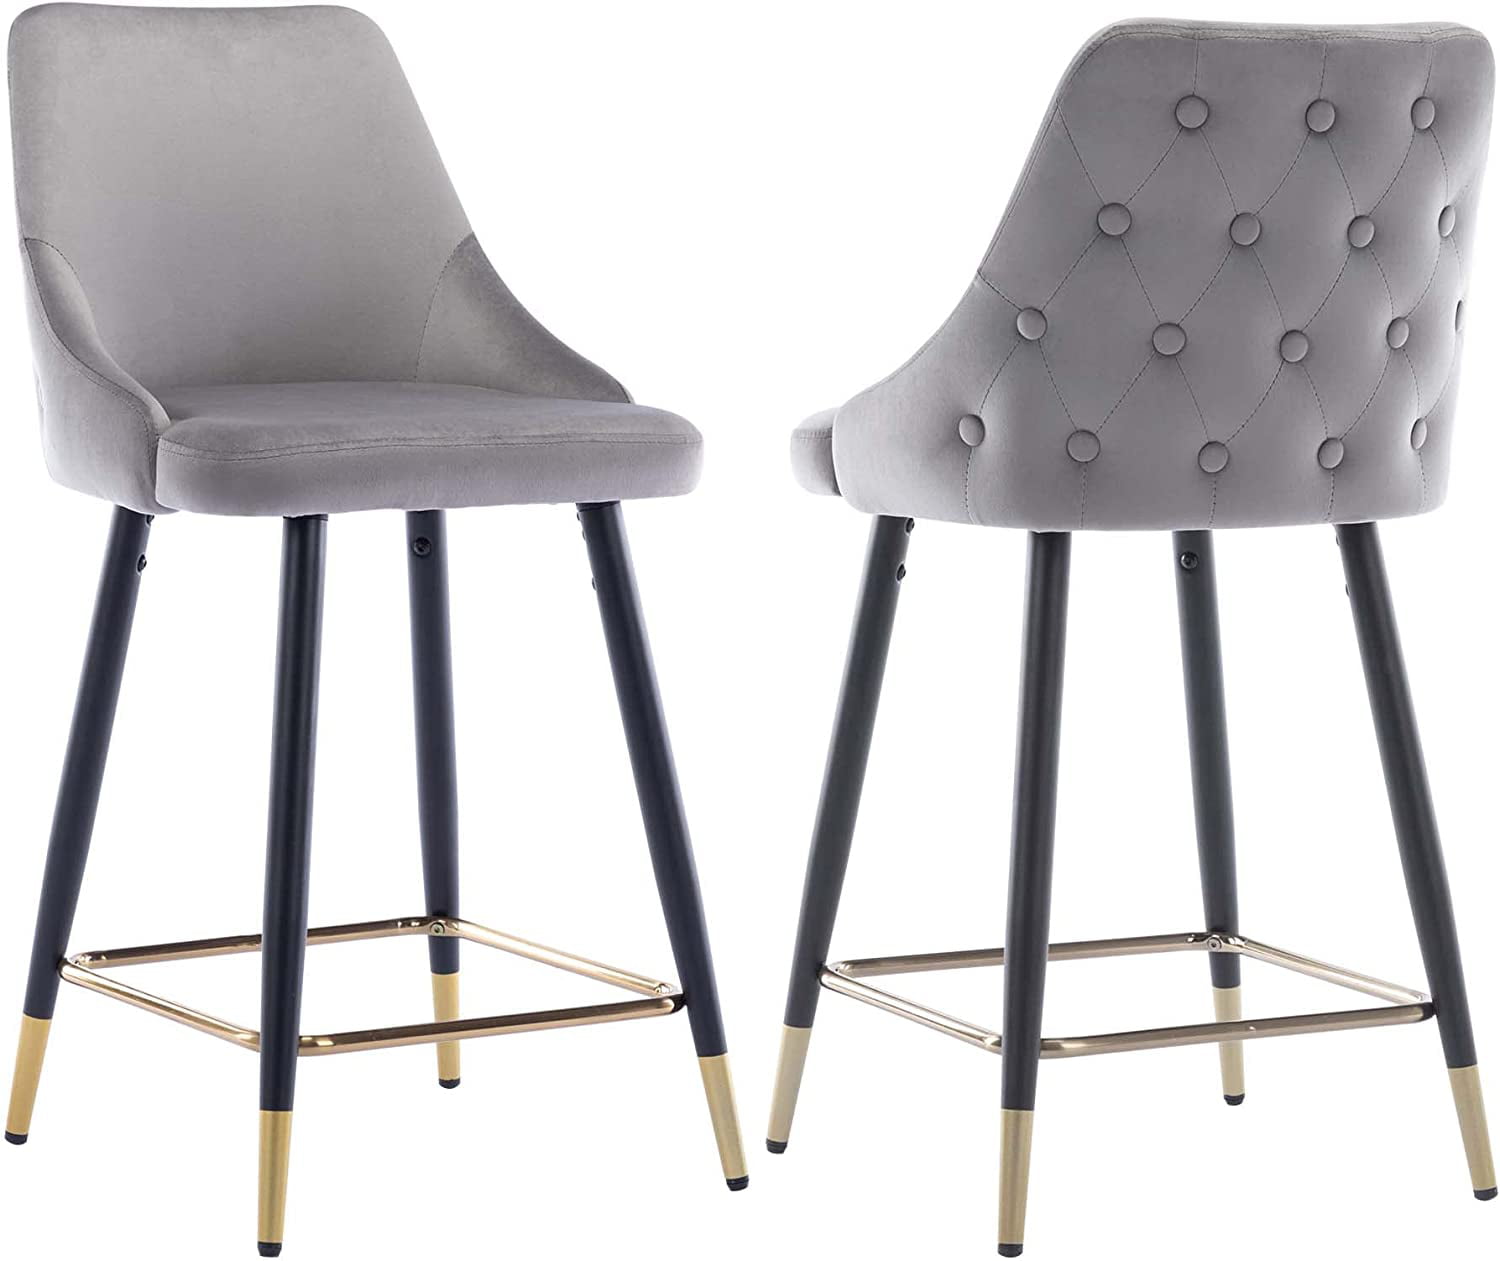 Houston Round Upholstered Velvet Bar Stools Set of 2 - DUHOME – Duhome  Furniture